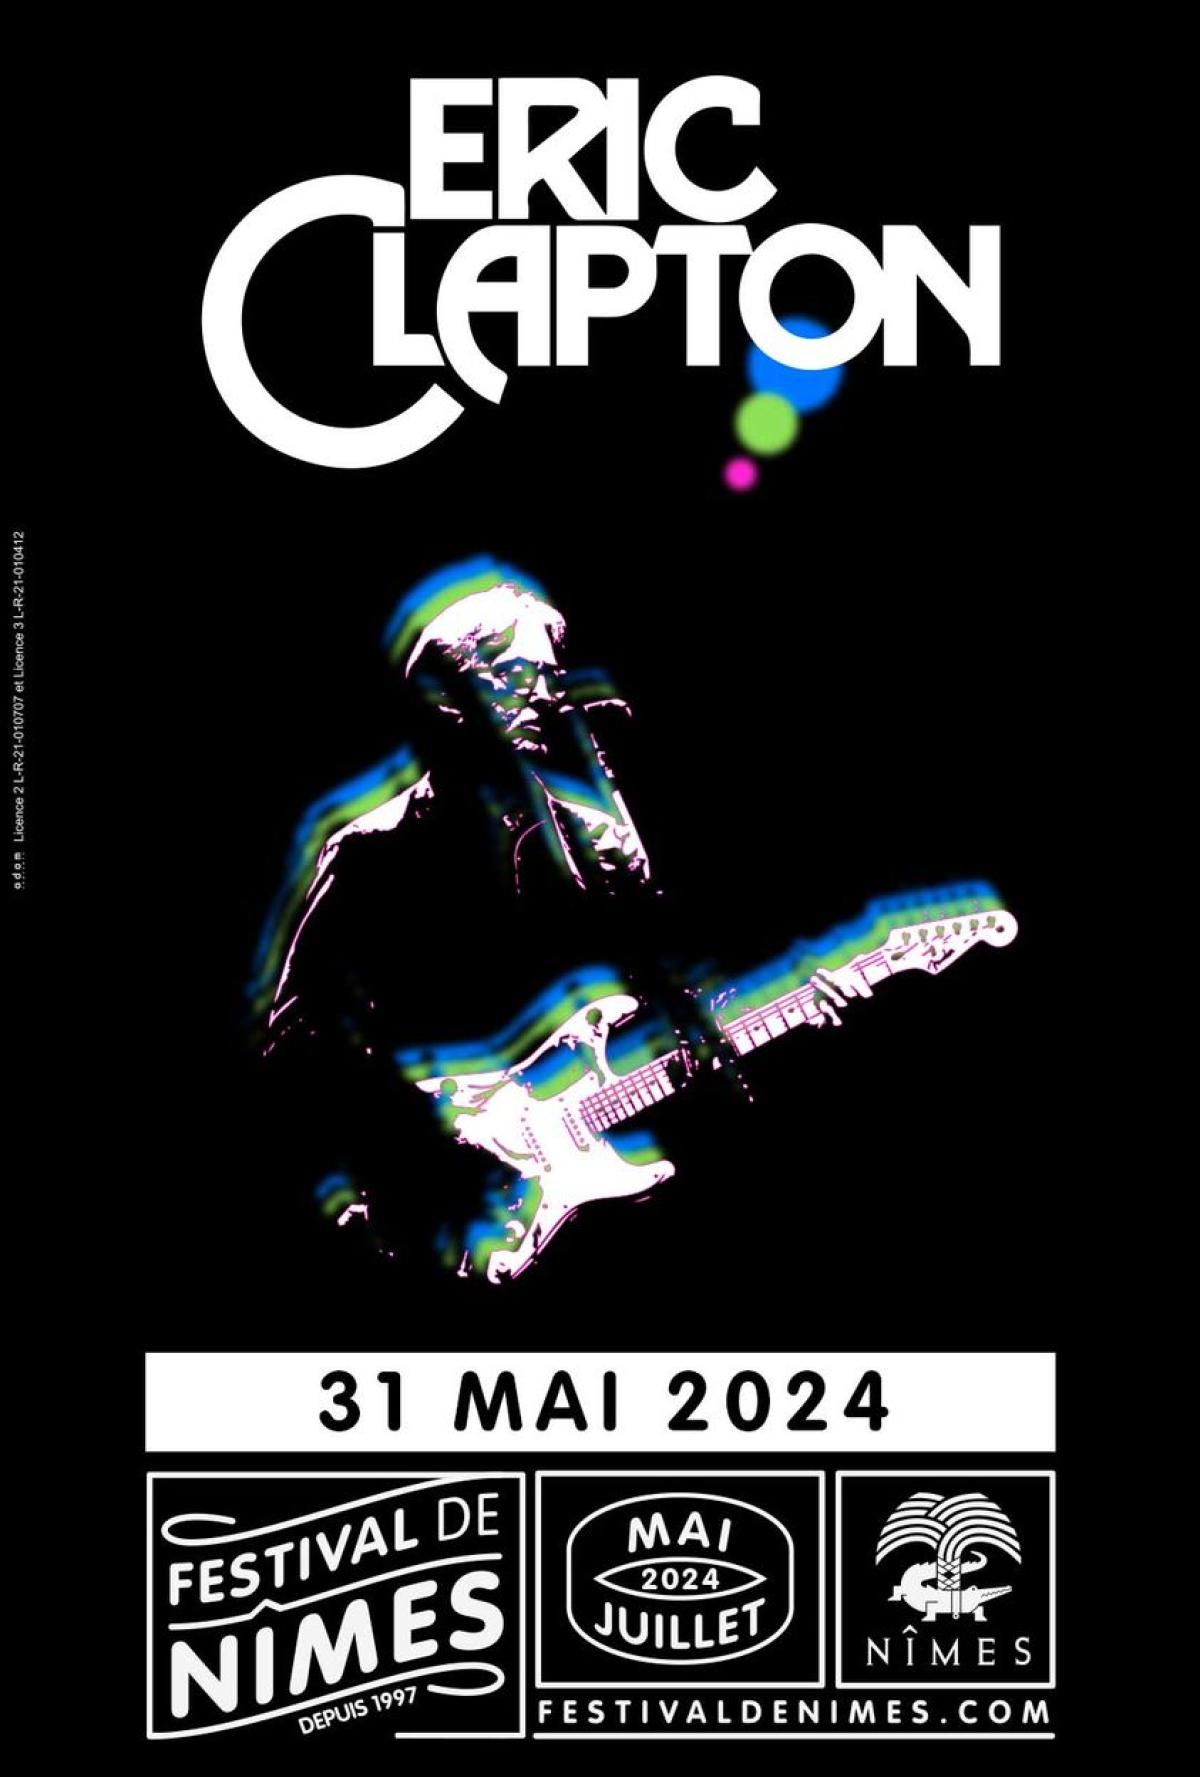 Eric Clapton in der Arenes de Nimes Tickets